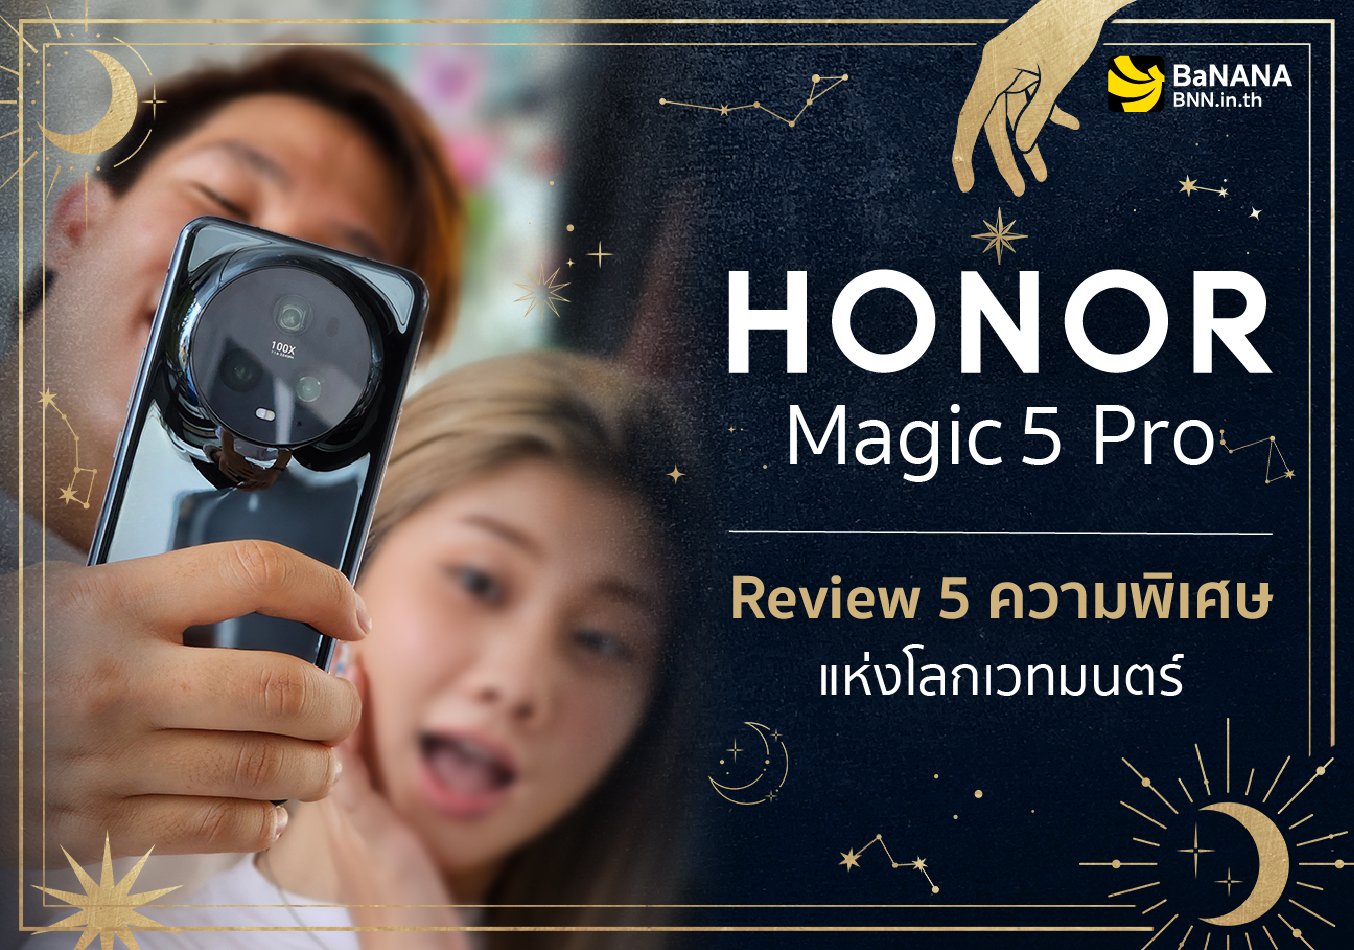 Review HONOR Magic5 Pro กับ 5 ความพิเศษแห่งโลกเวทมนตร์